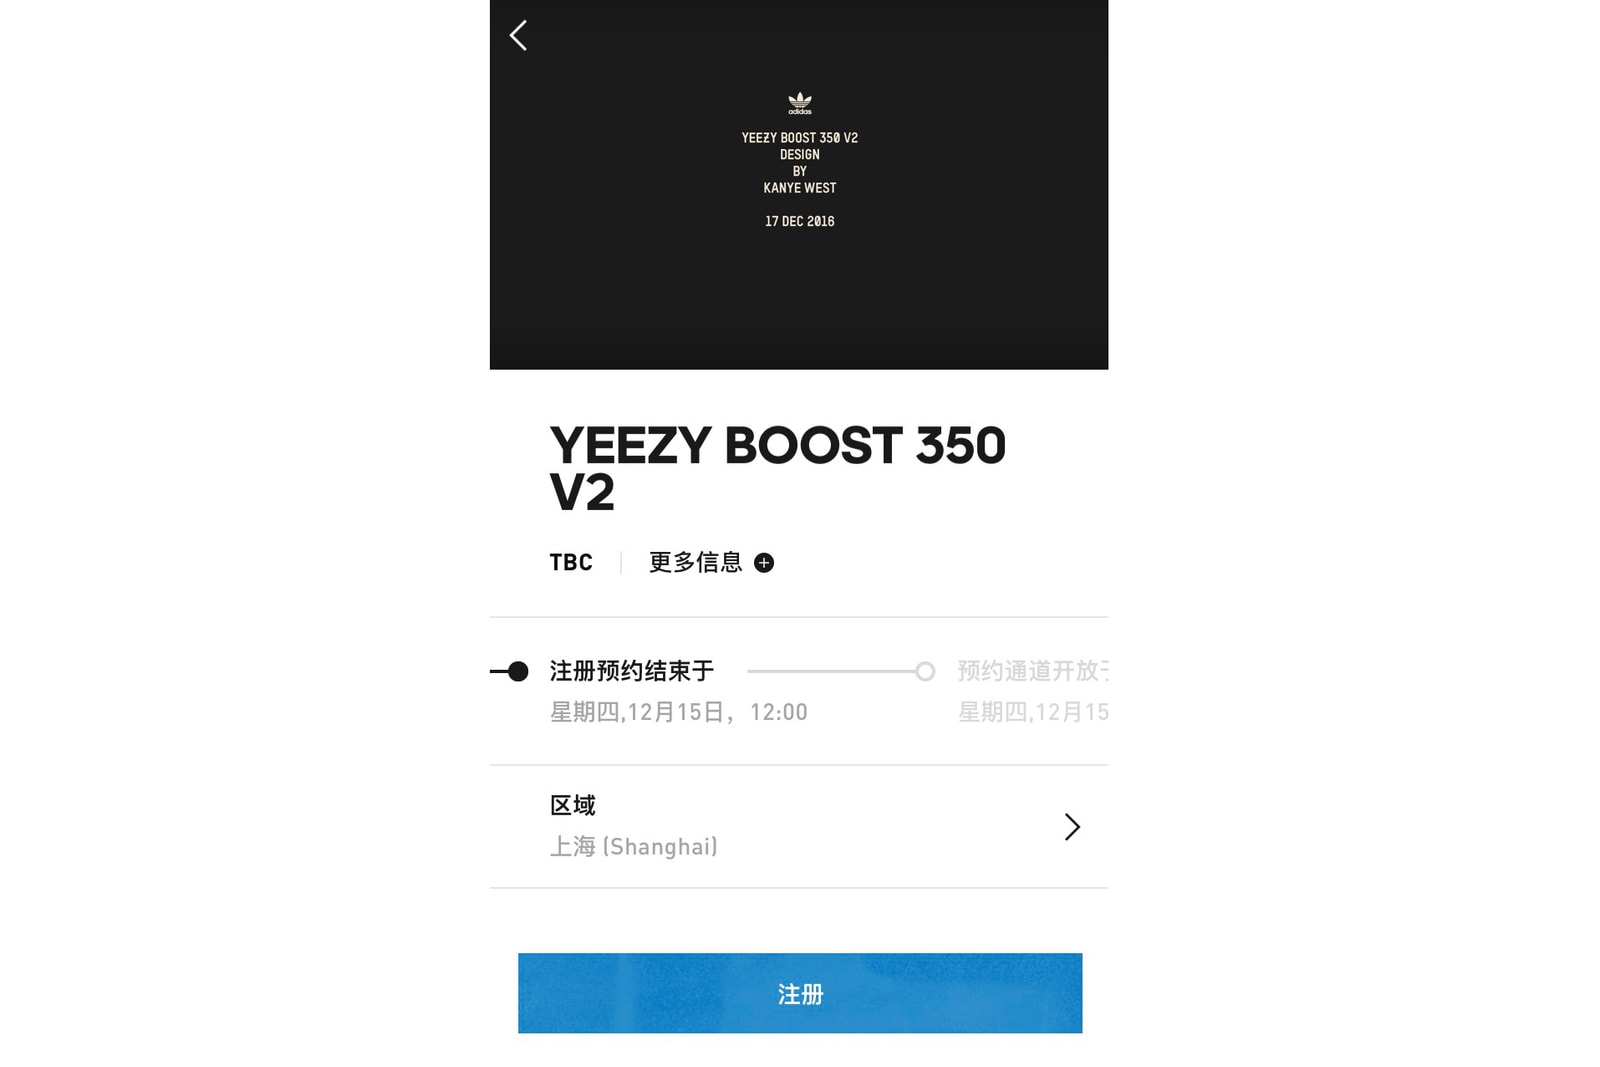 adidas Originals YEEZY BOOST 350 V2 Black/White adidas Confirmed app